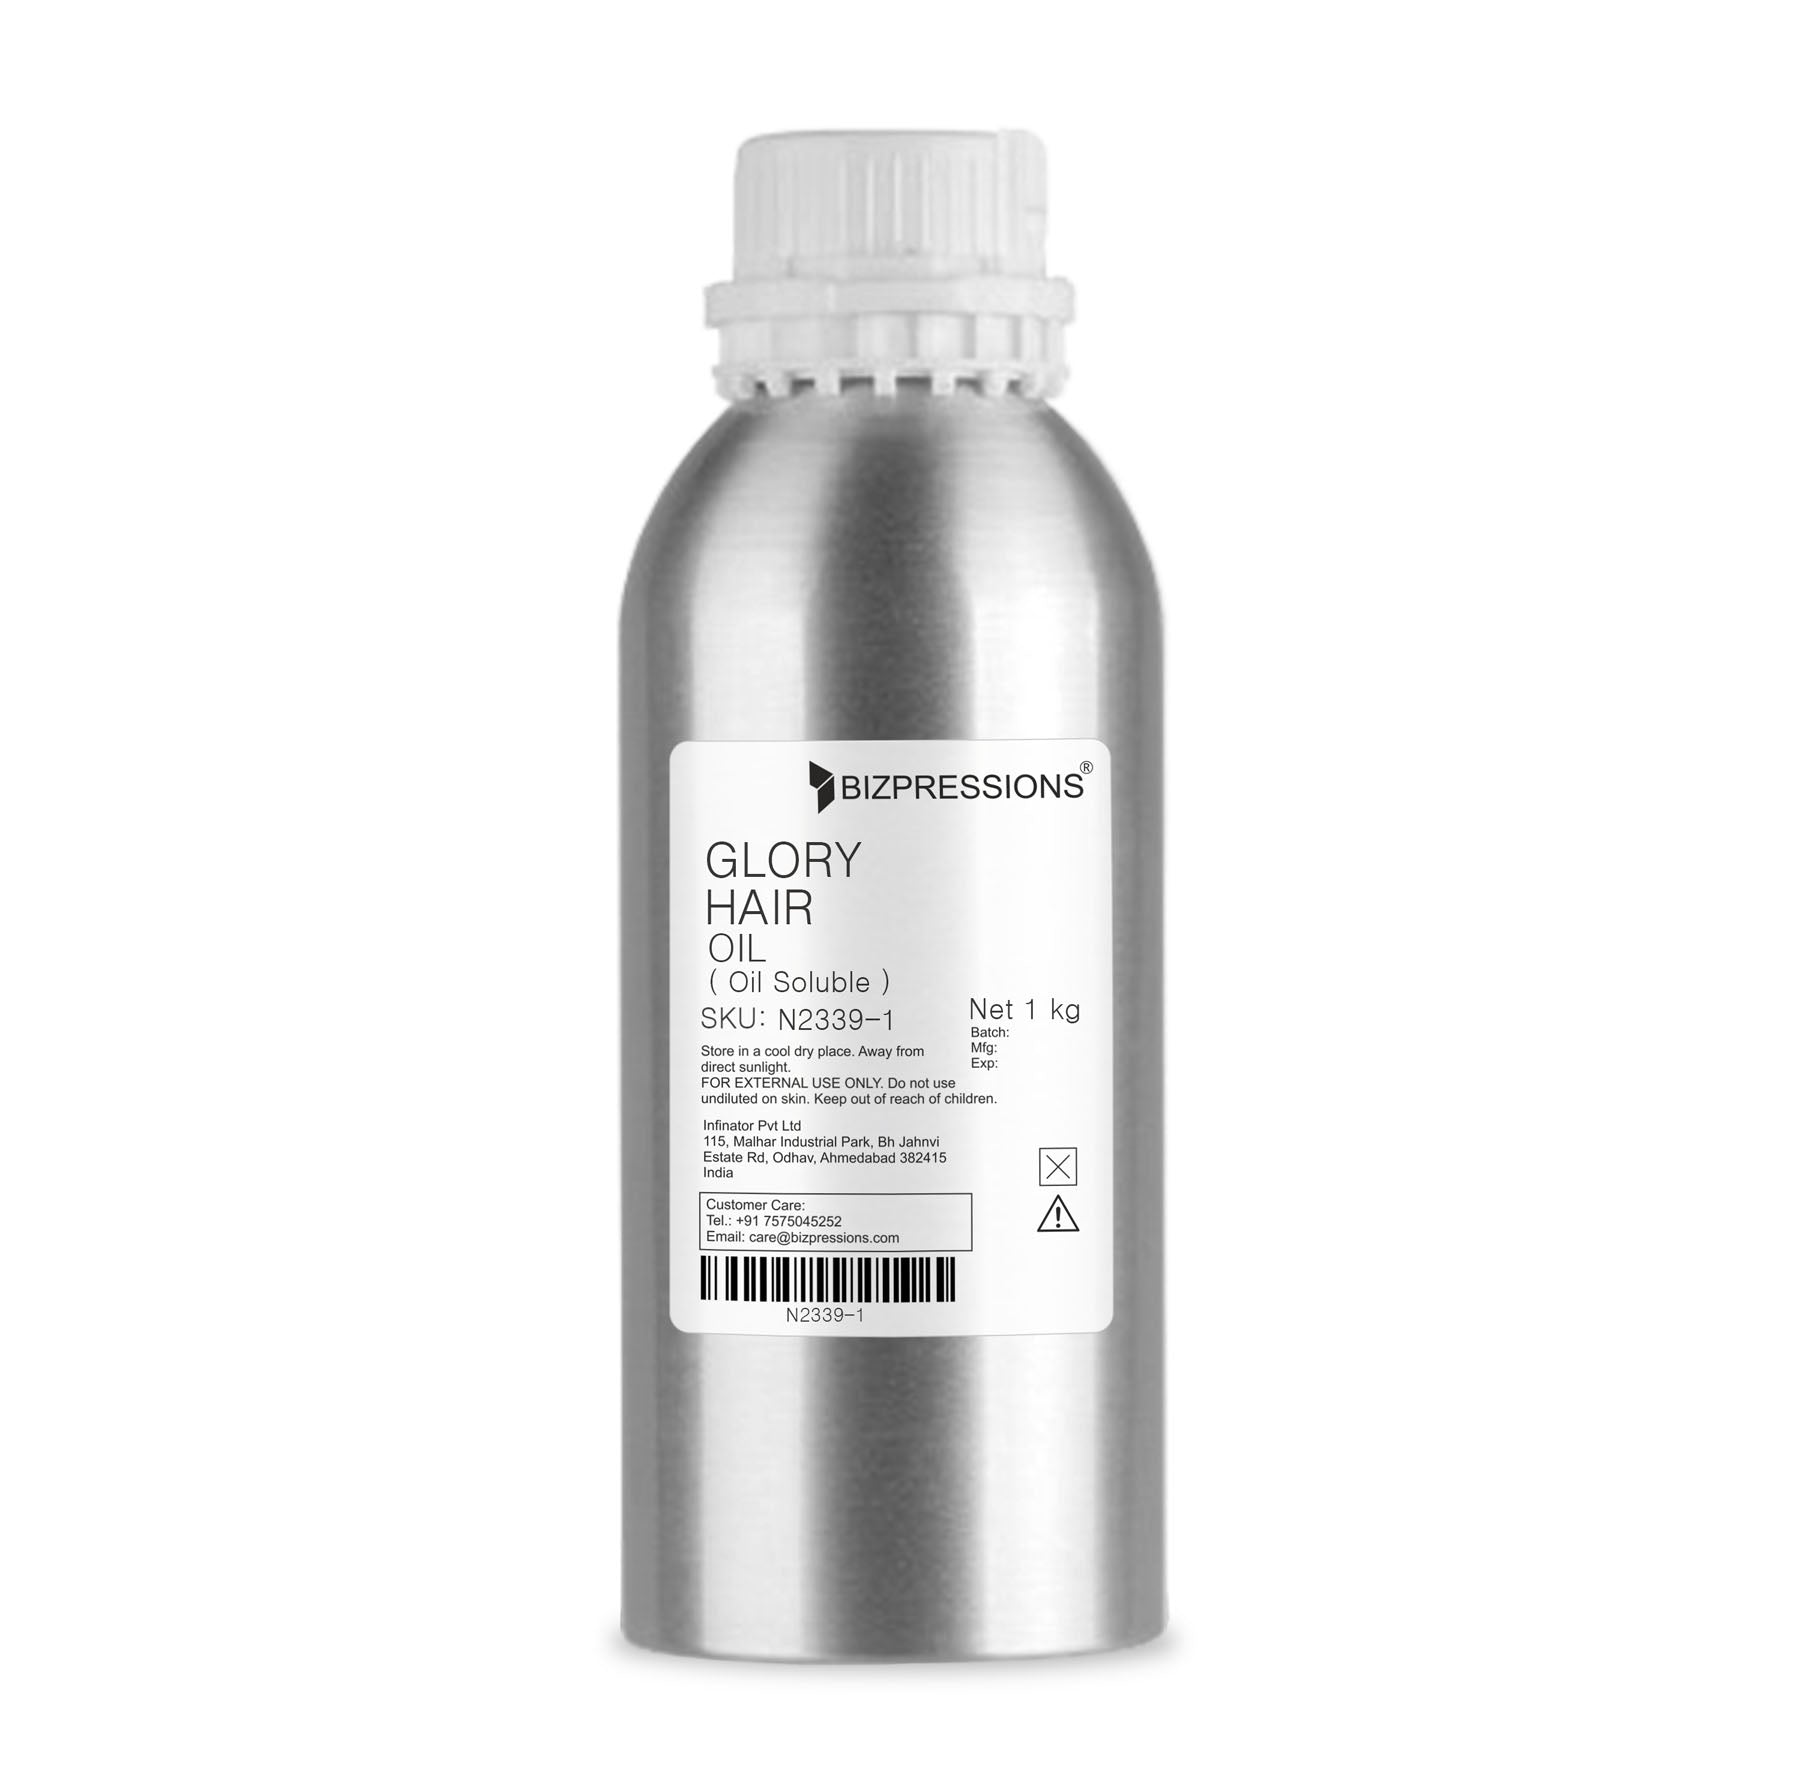 GLORY HAIR OIL - Fragrance ( Oil Soluble ) - 1 kg